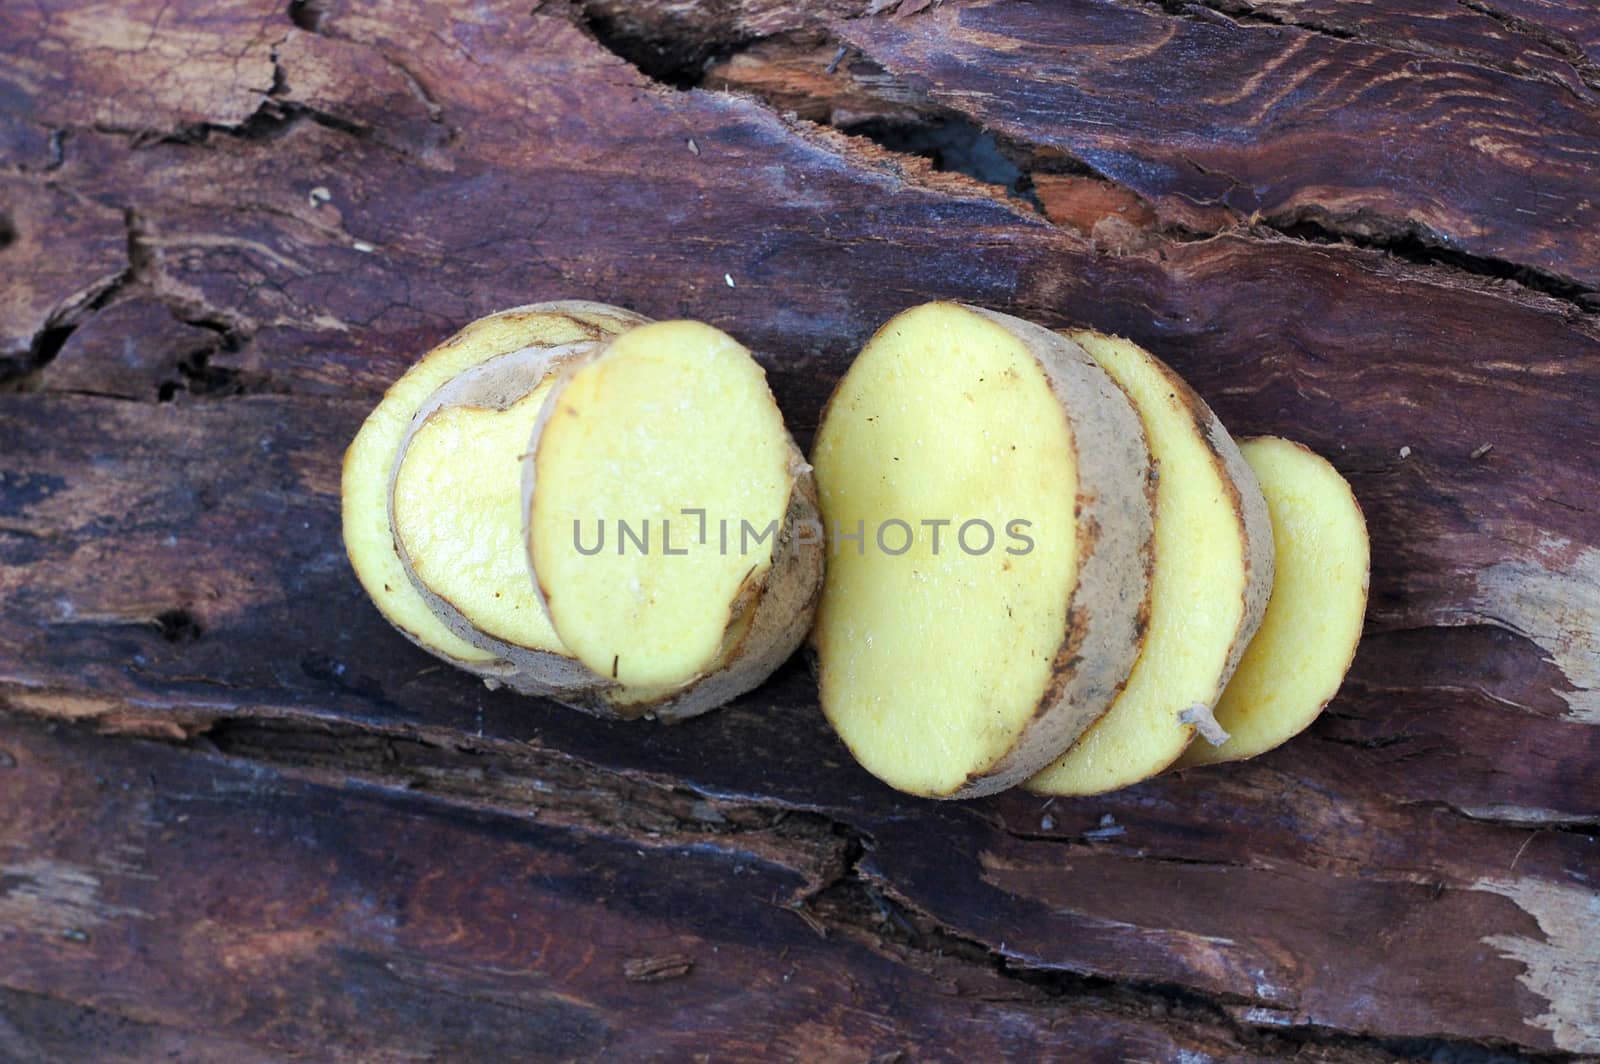 Sliced potatoes on dark wood background by nehru